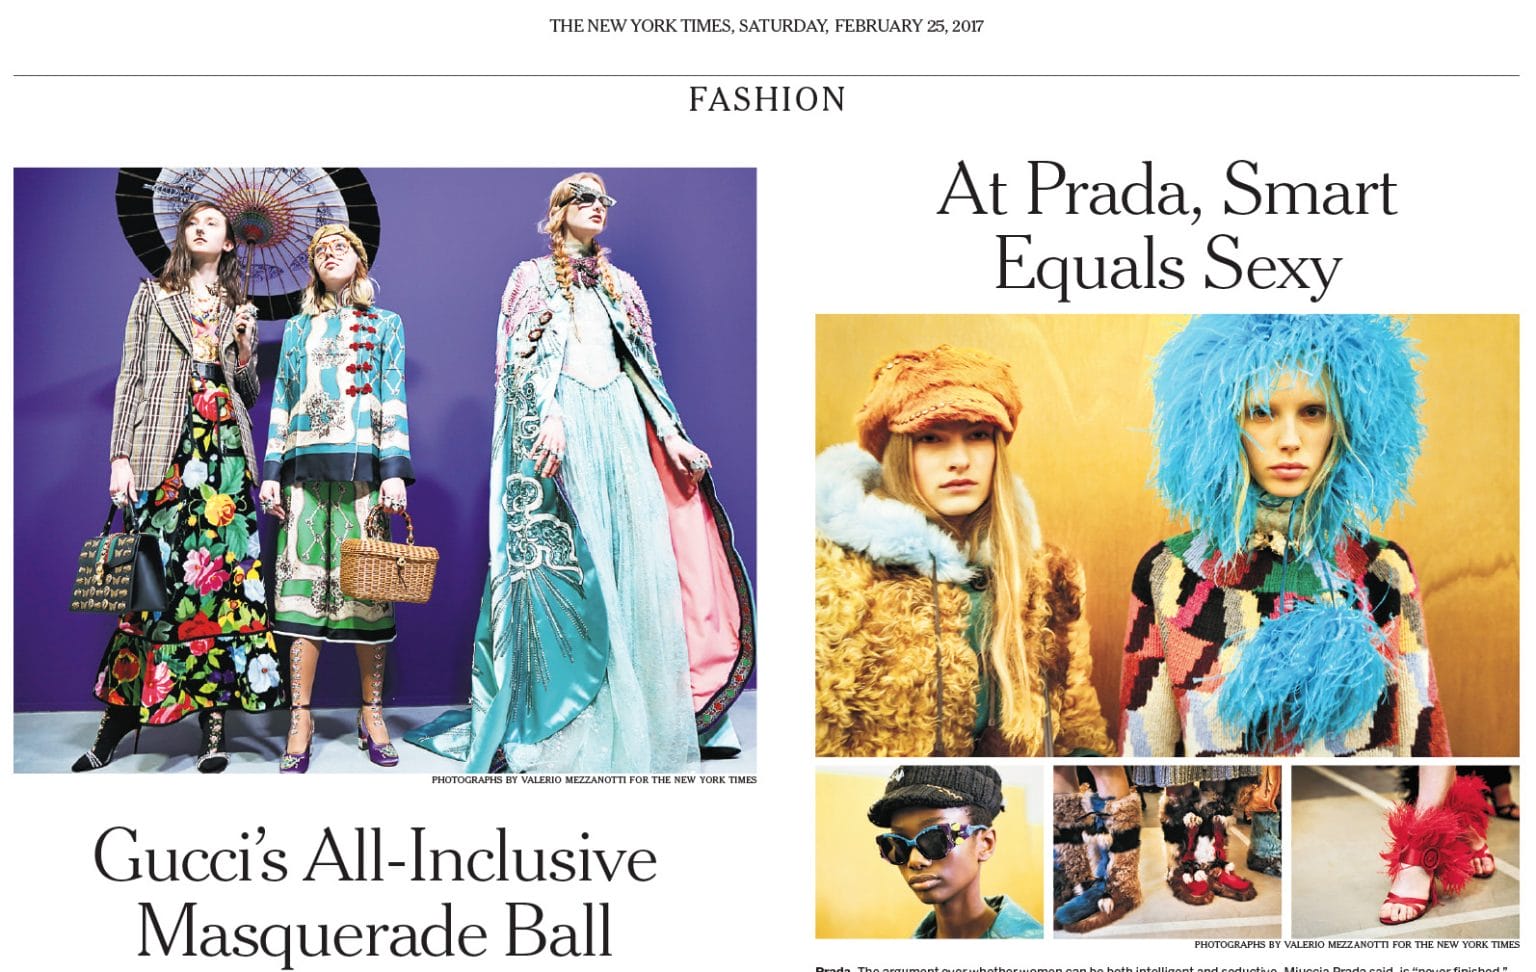 Gucci and Prada Fashion Show Backstage, Photo by Valerio Mezzanotti for The New York Times